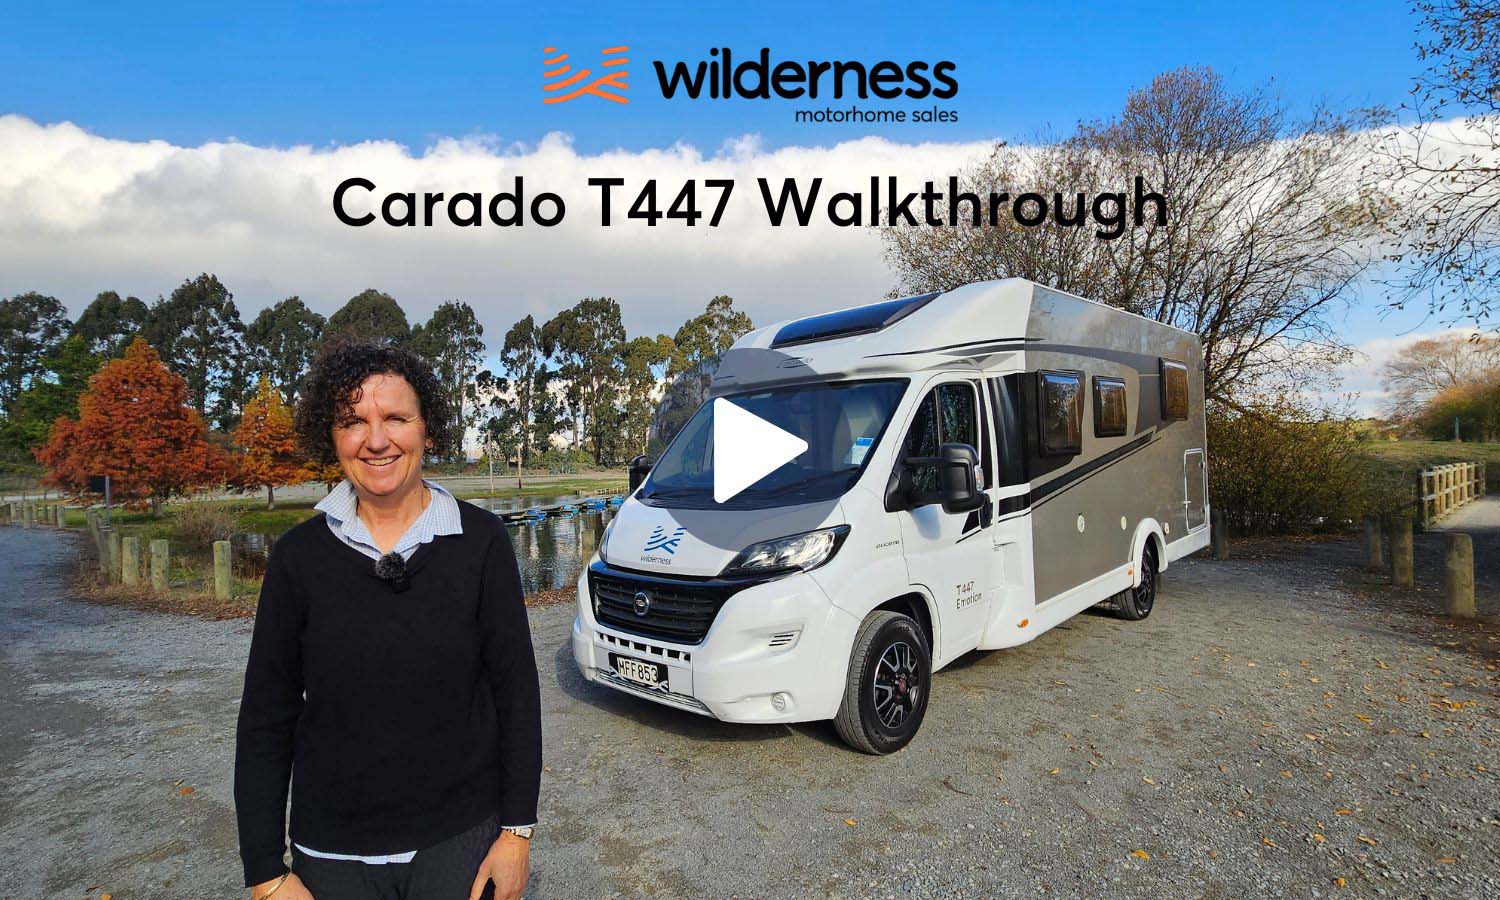 Carado T447 2019 Motorhome | Carado T447 For Sale NZ | Wilderness Video